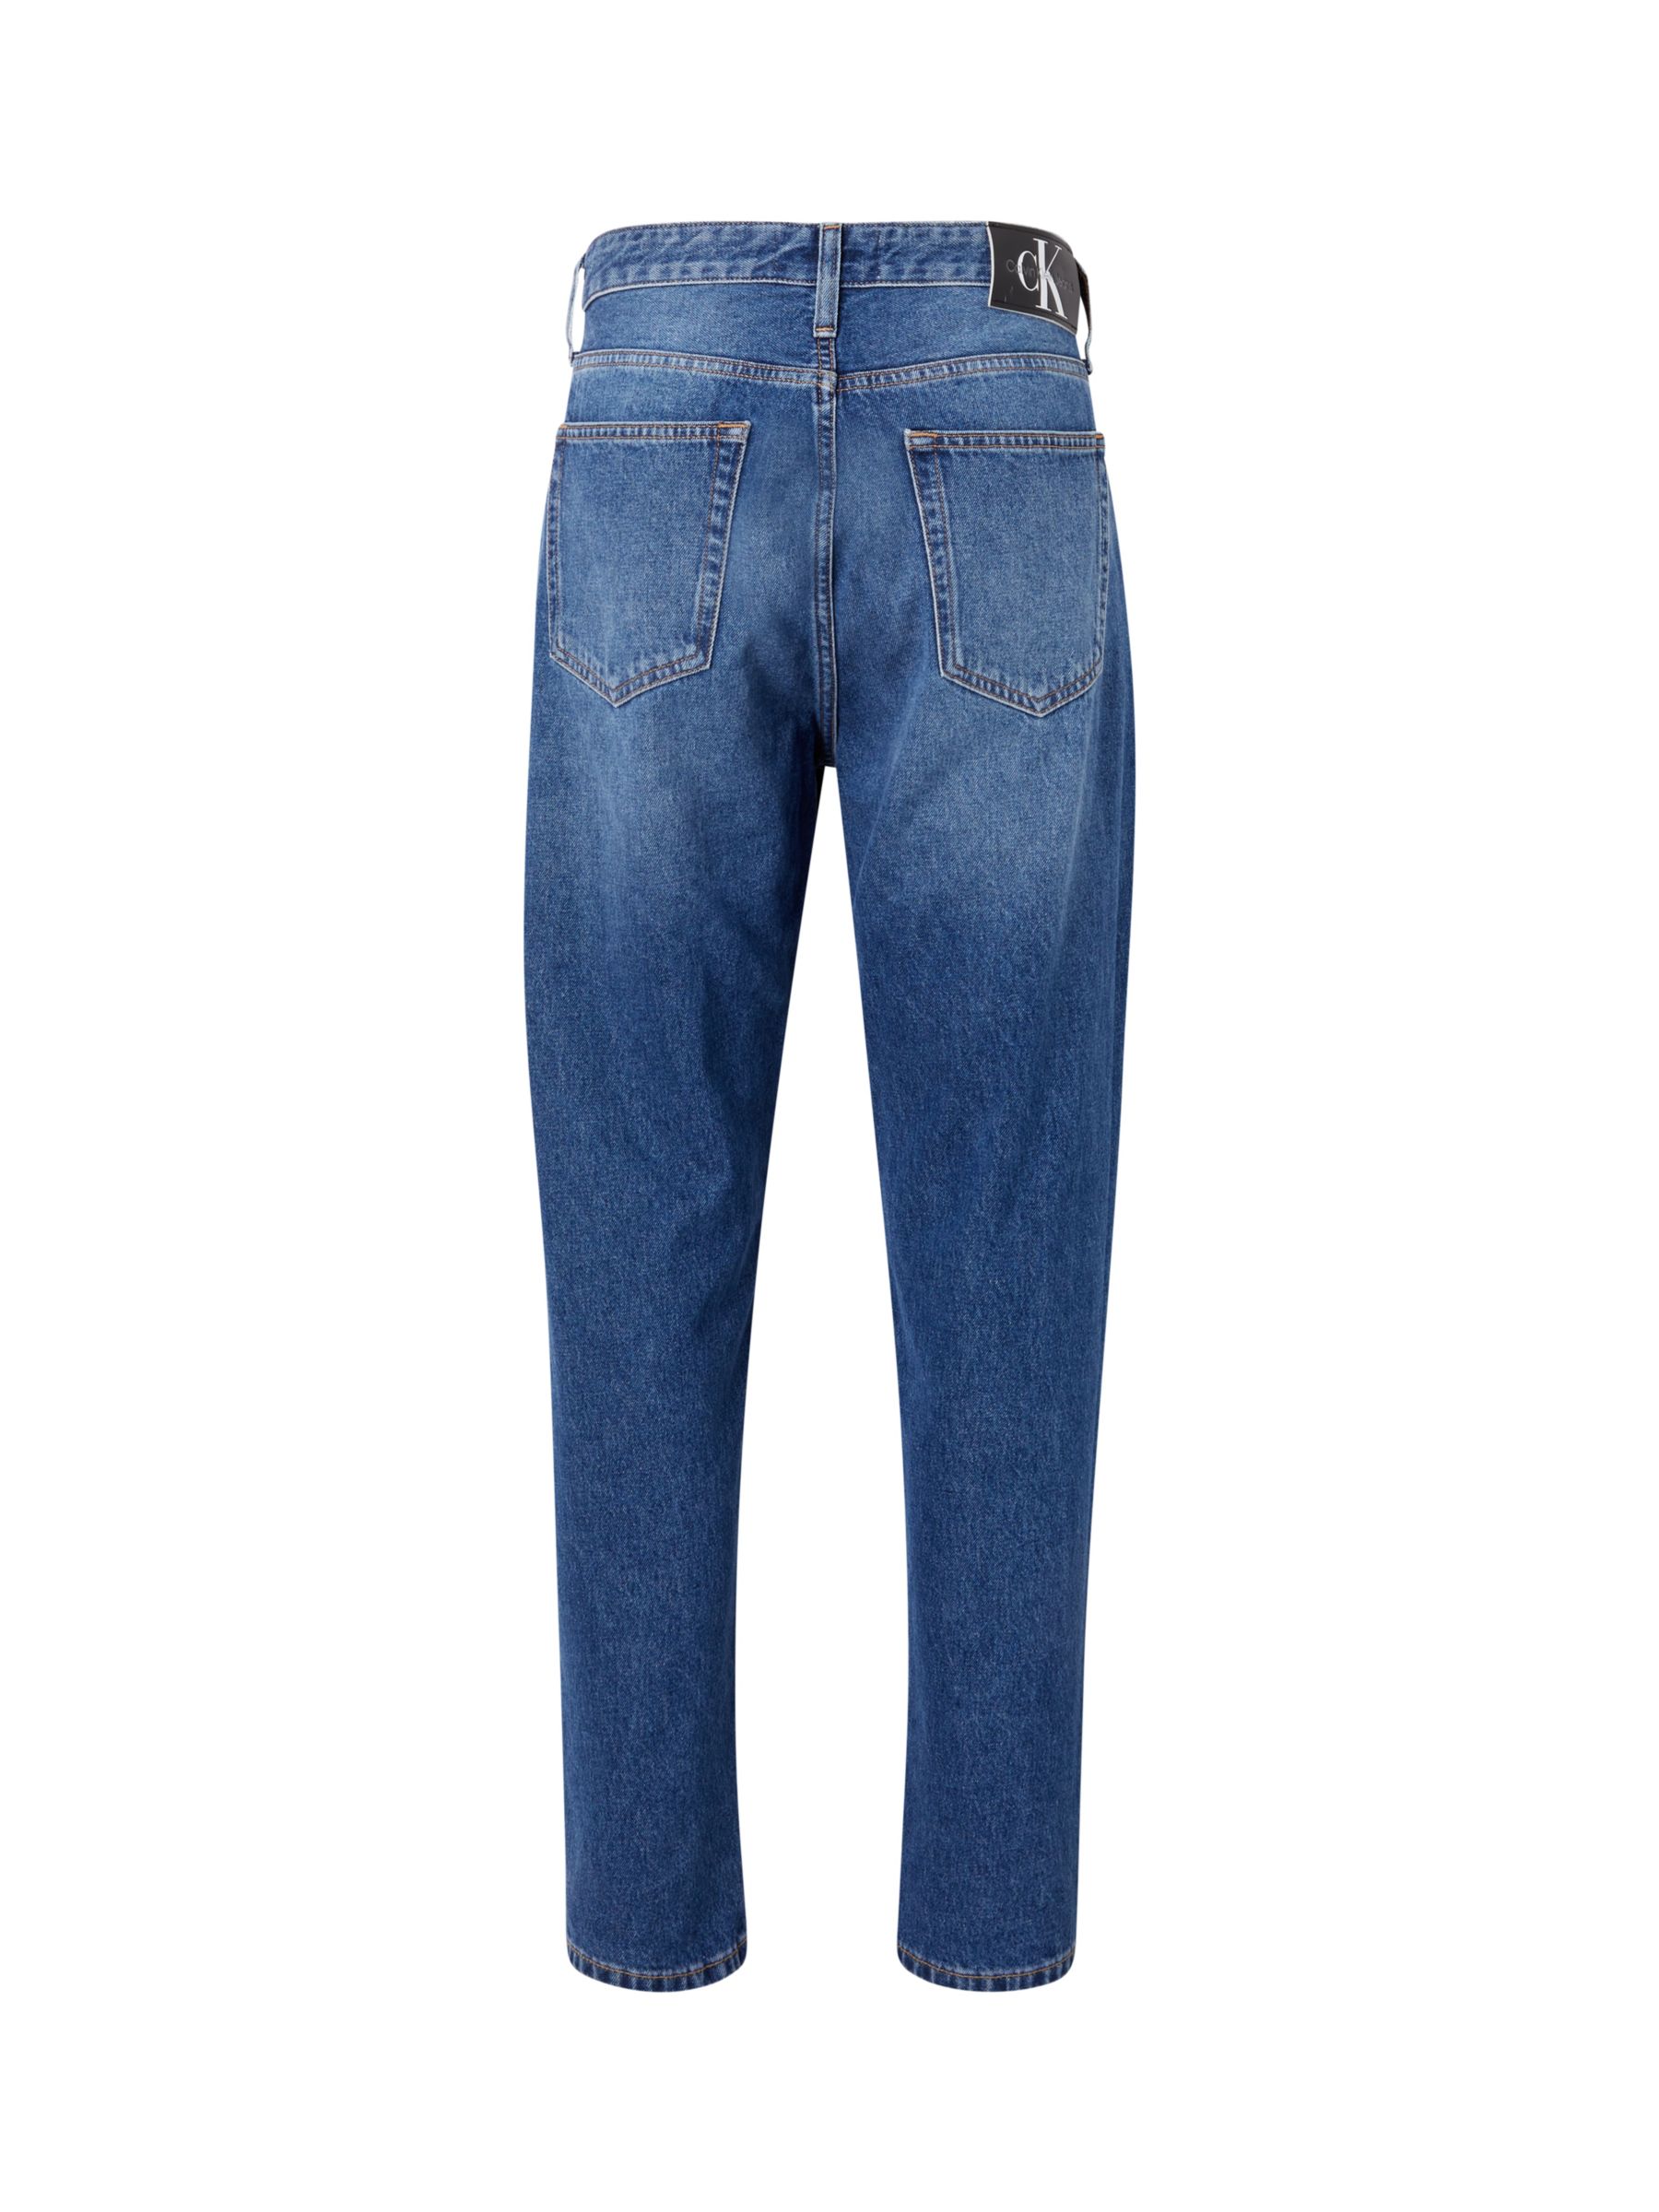 Buy Calvin Klein Jeans Slim Tapered Jeans, Denim Dark Online at johnlewis.com